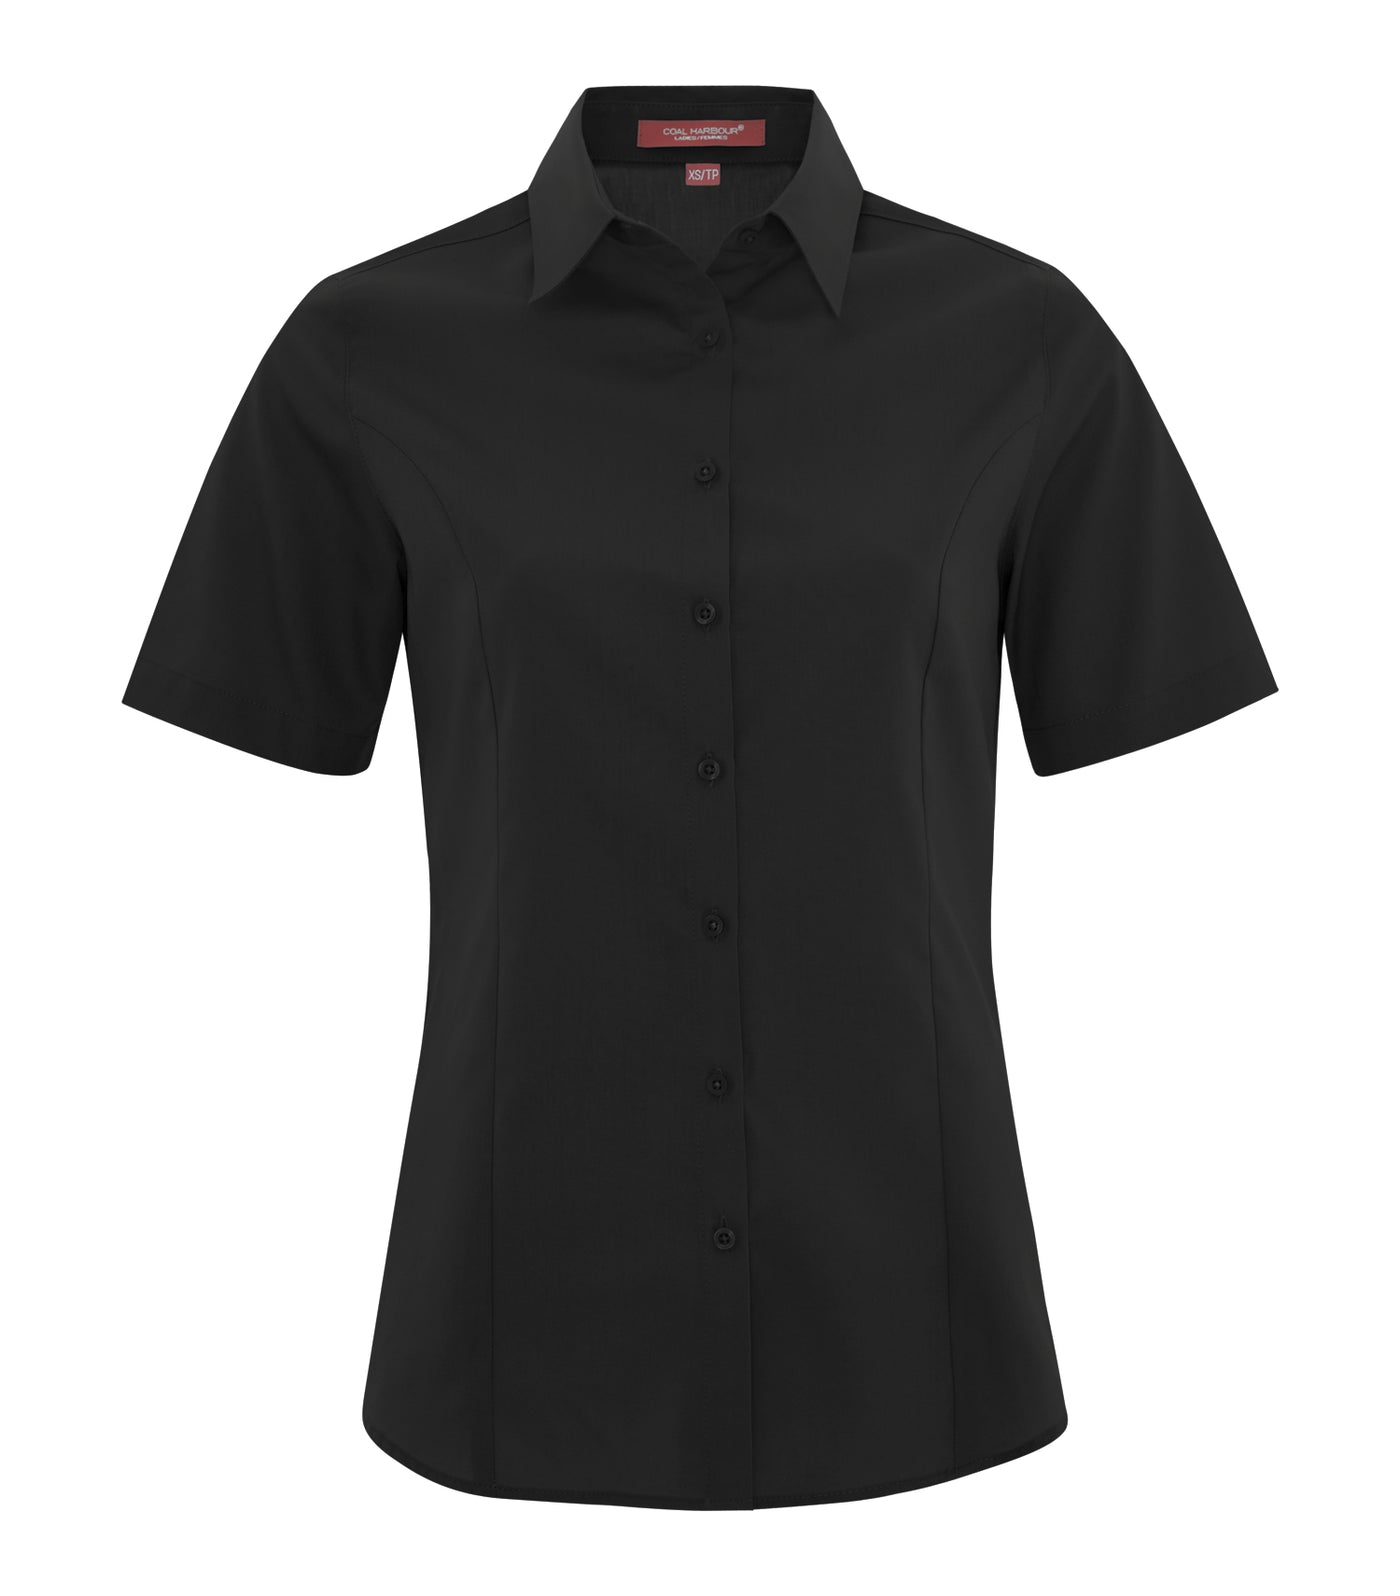 Black - Coal Harbour Women's Short Sleeve Work Shirt